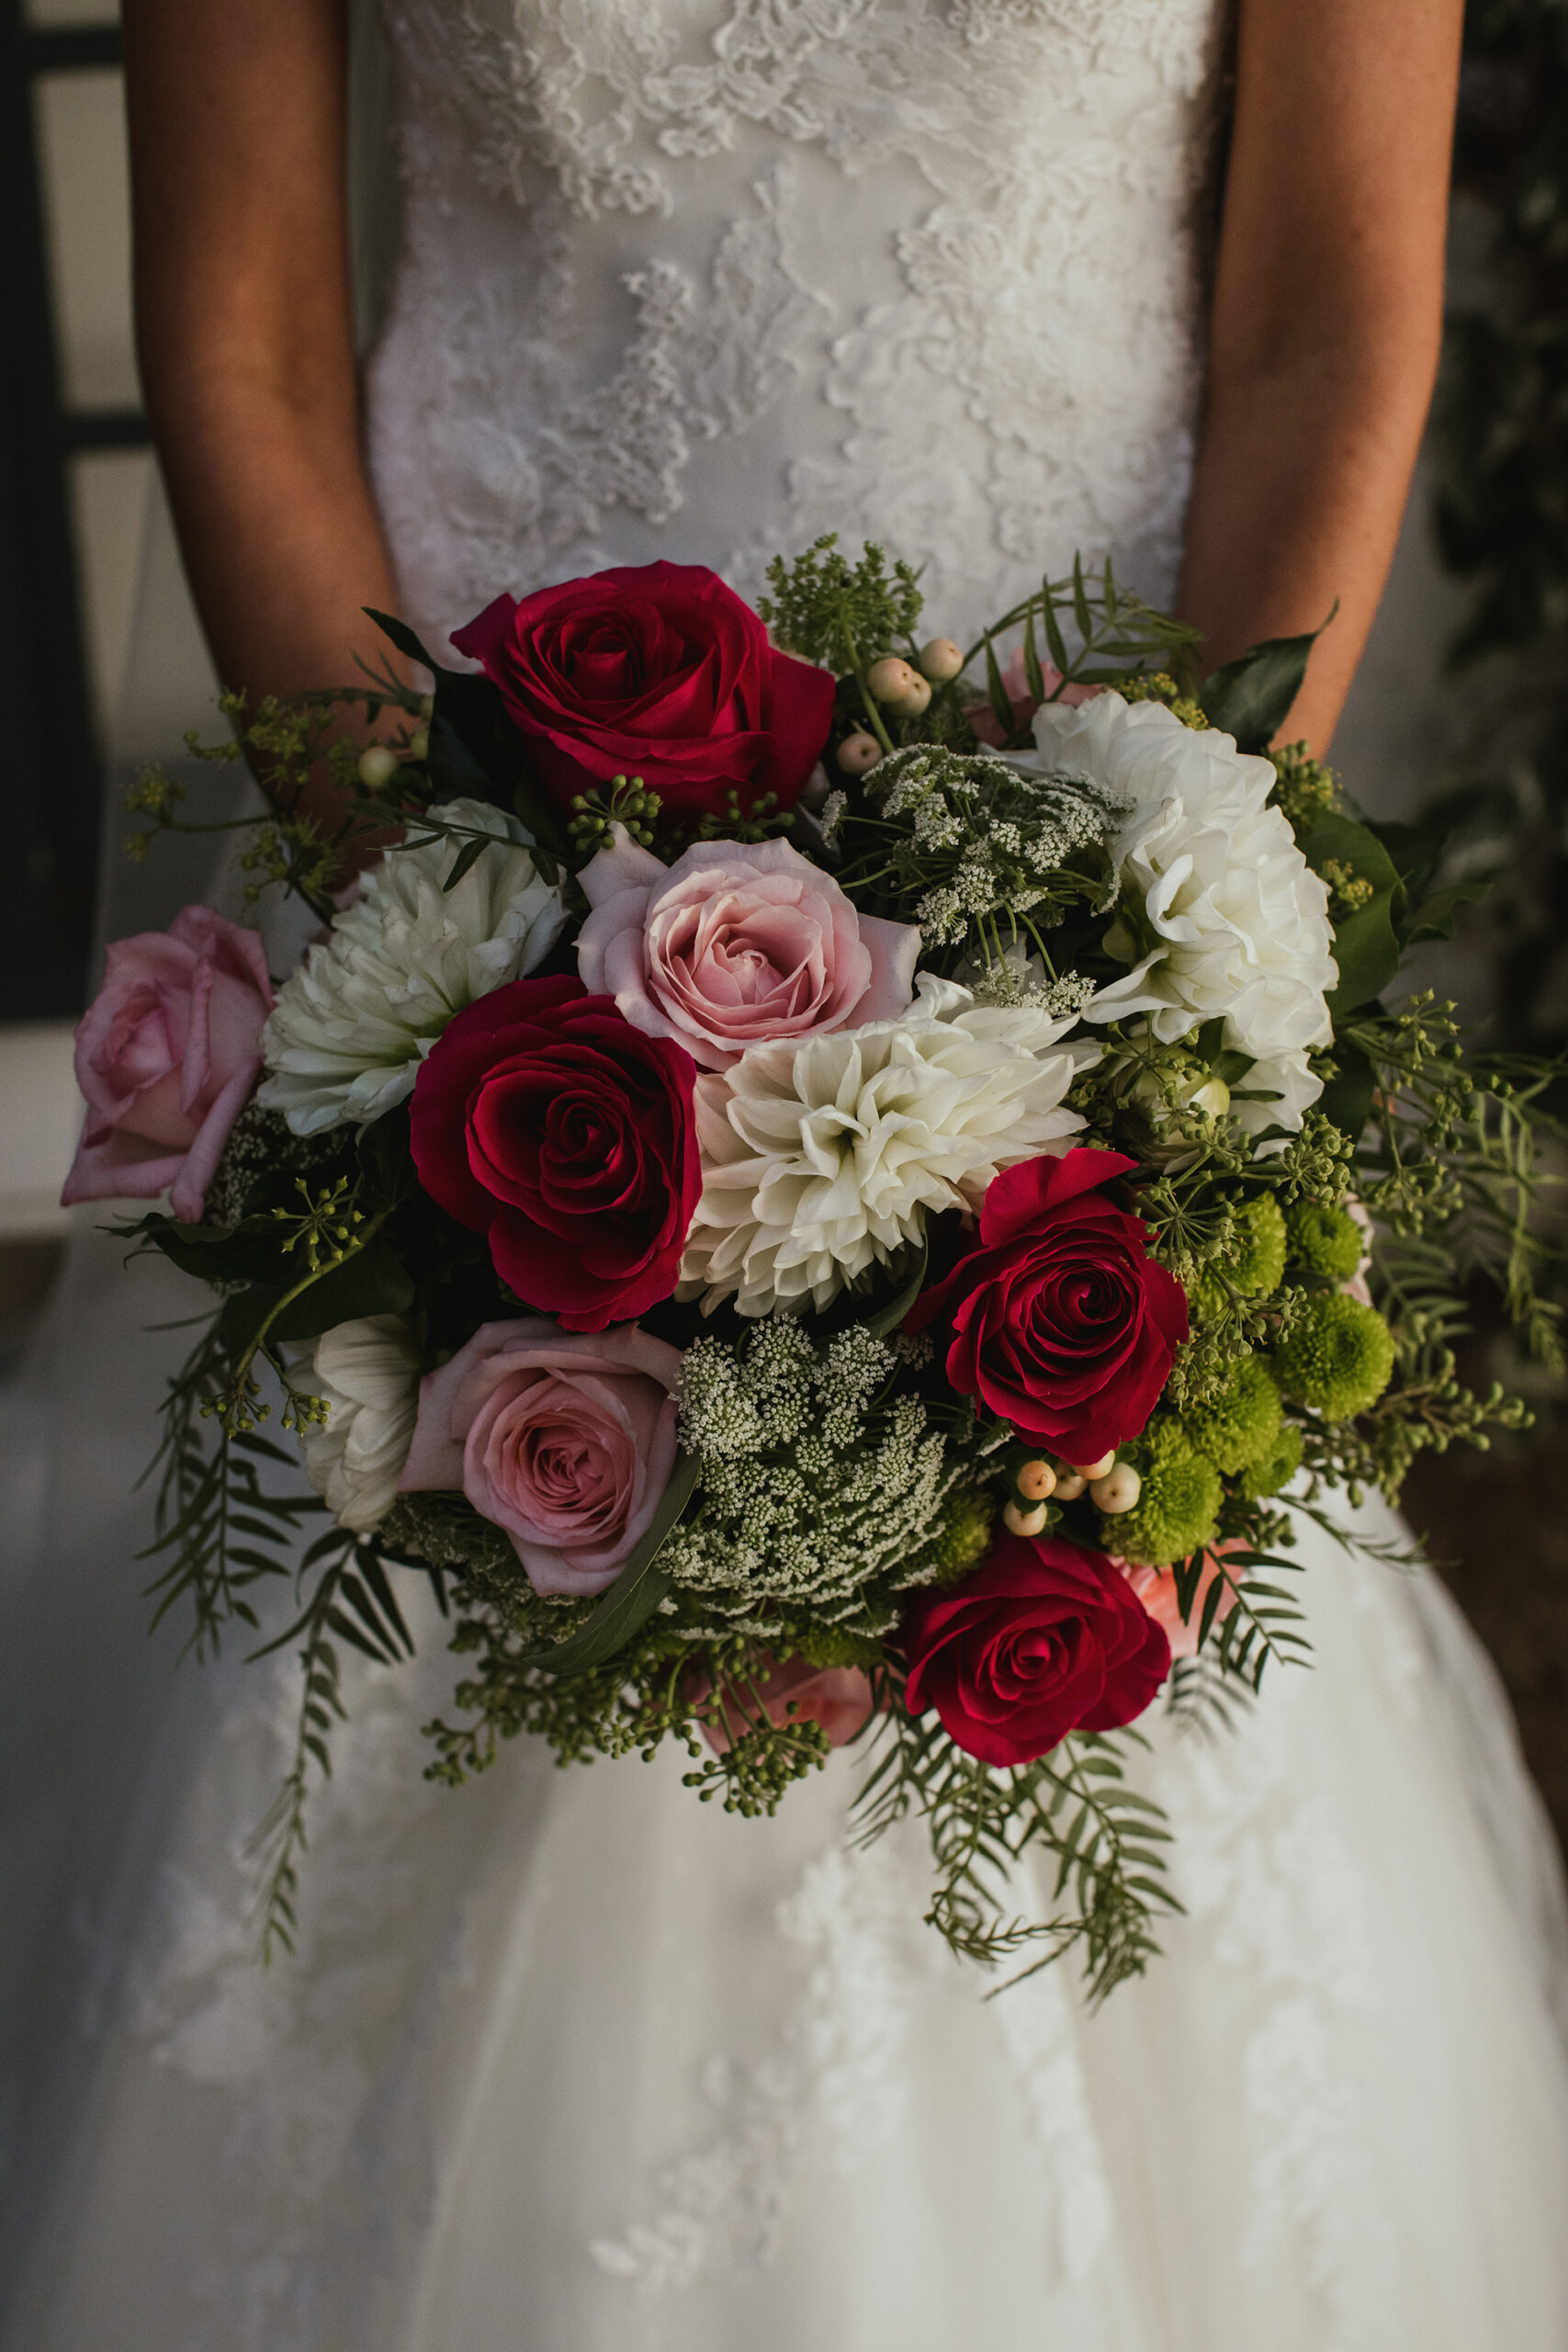 Monique_Alex_Elegant-Floral-Wedding_Whitewall-Photography_SBS_011